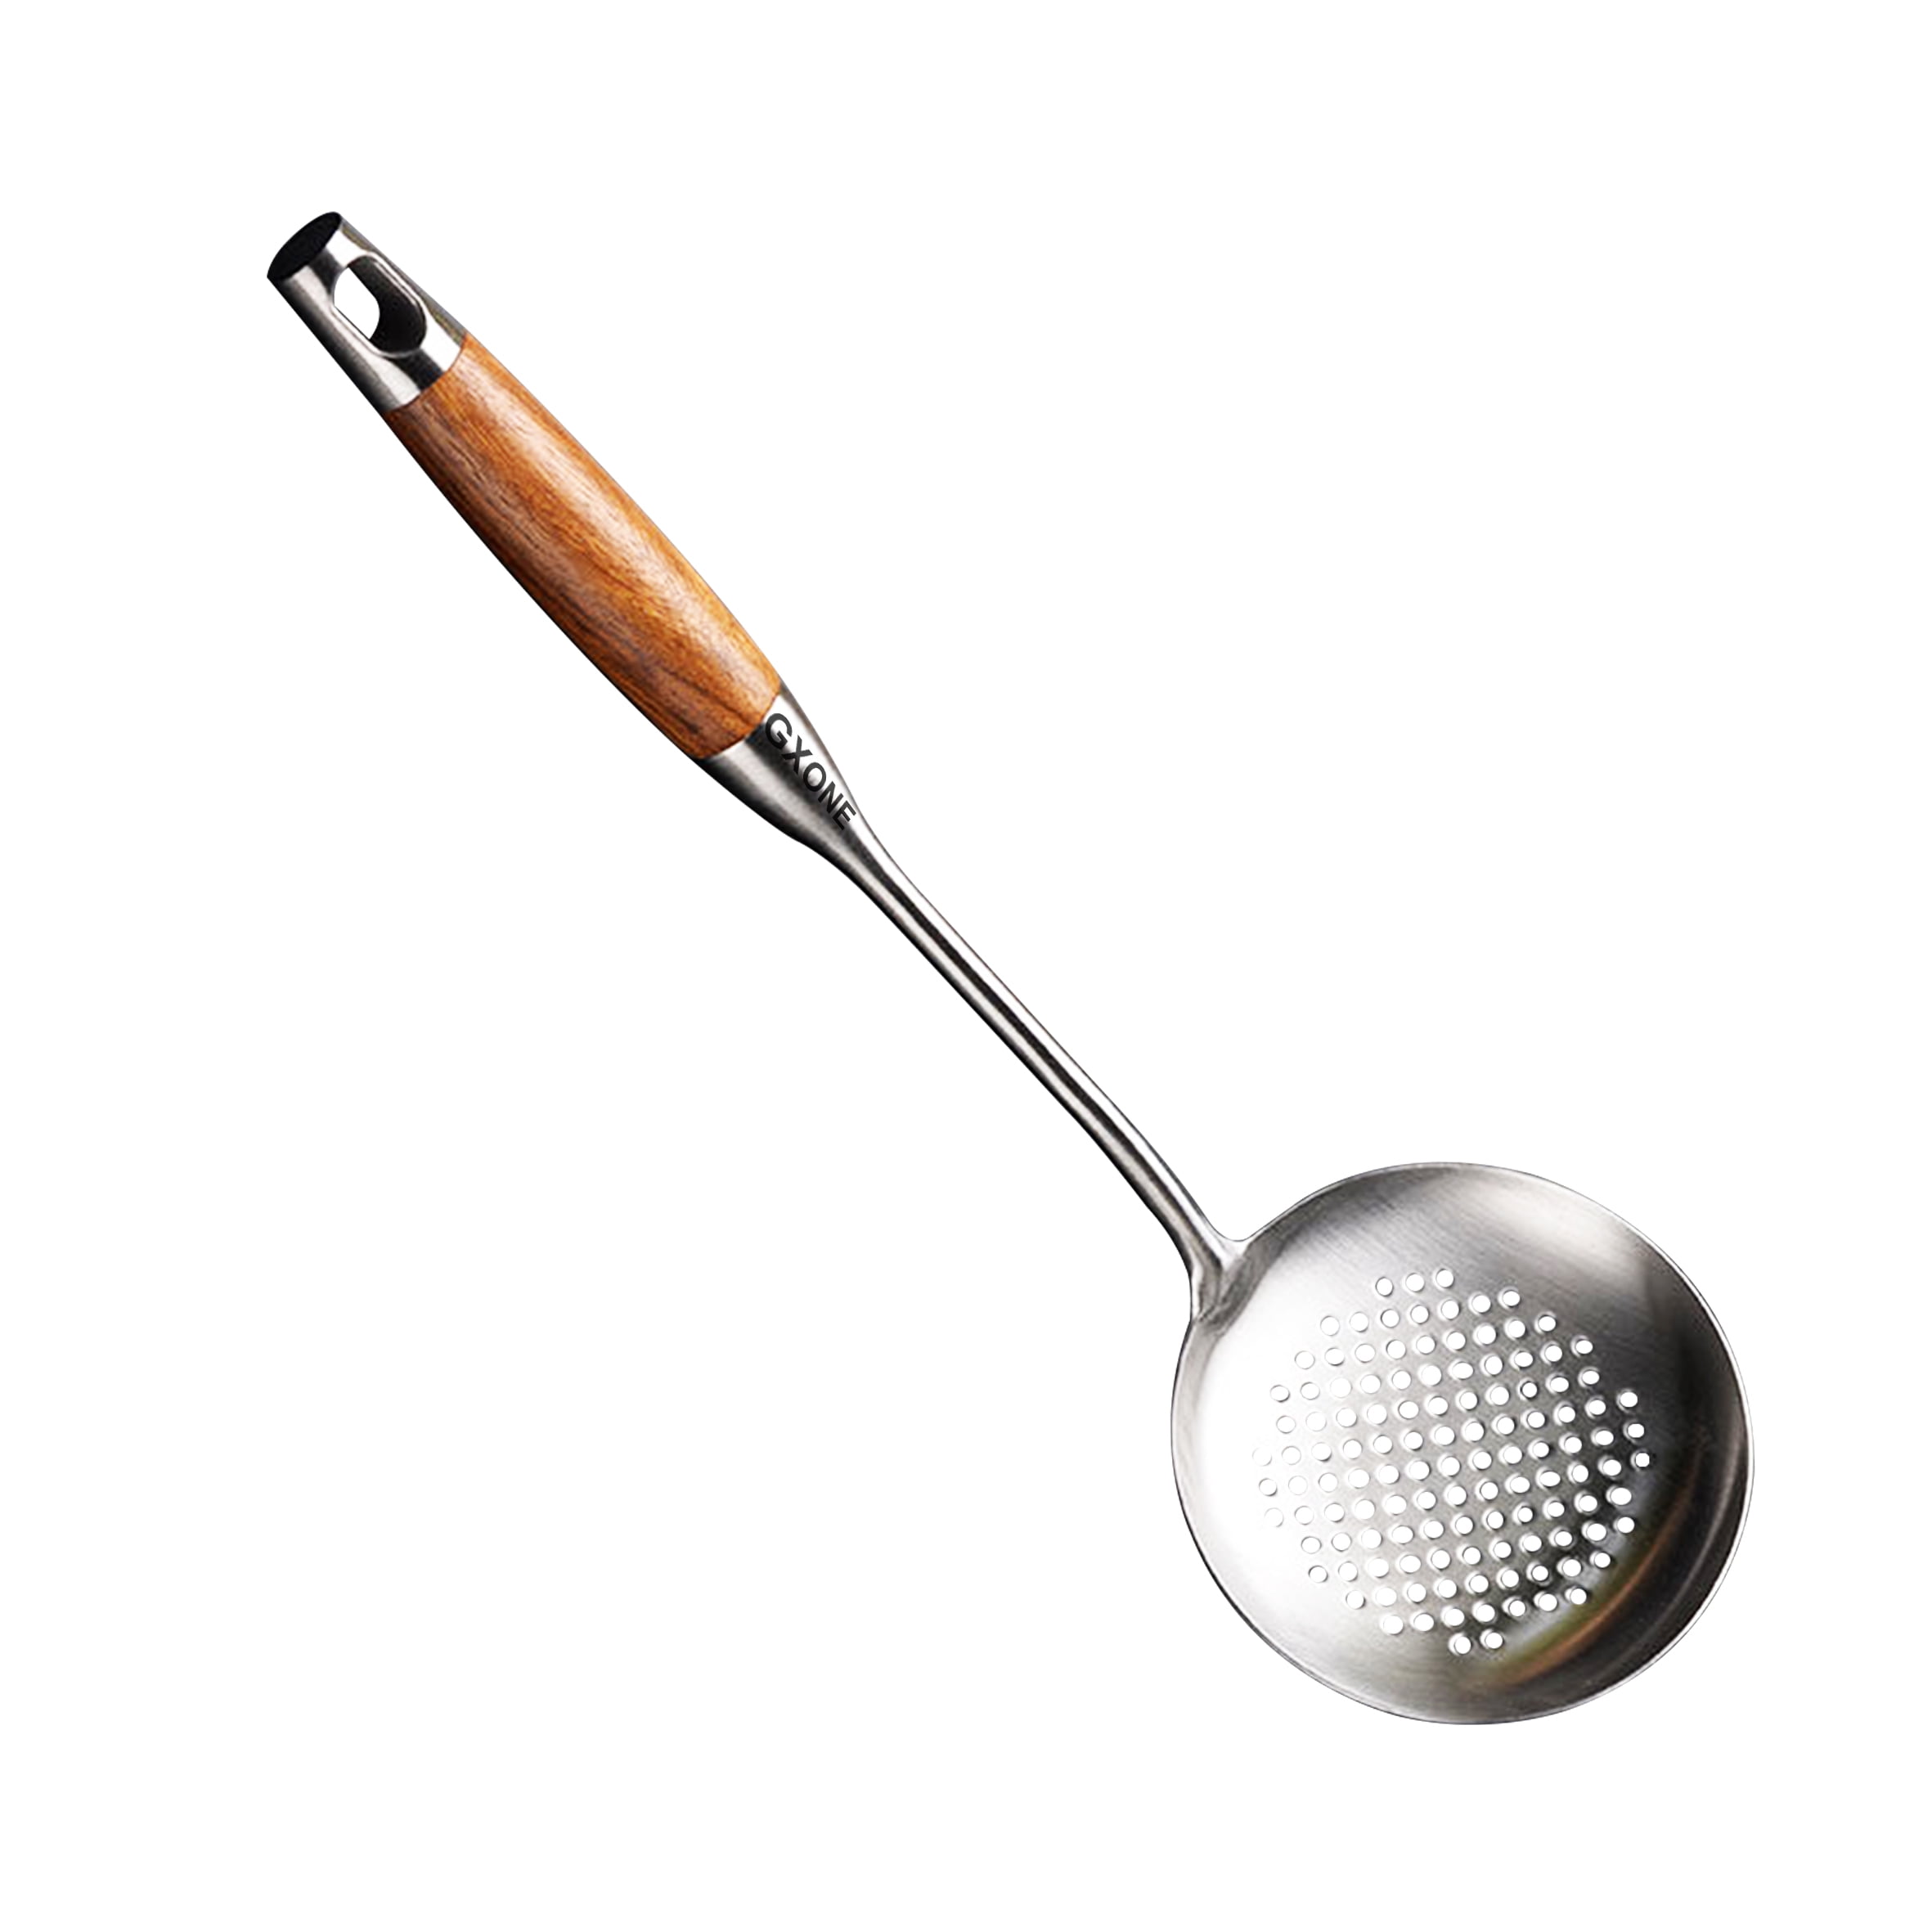 5 Piece Serving Spoon, Stainless Steel Cooking Utensils Set #48076